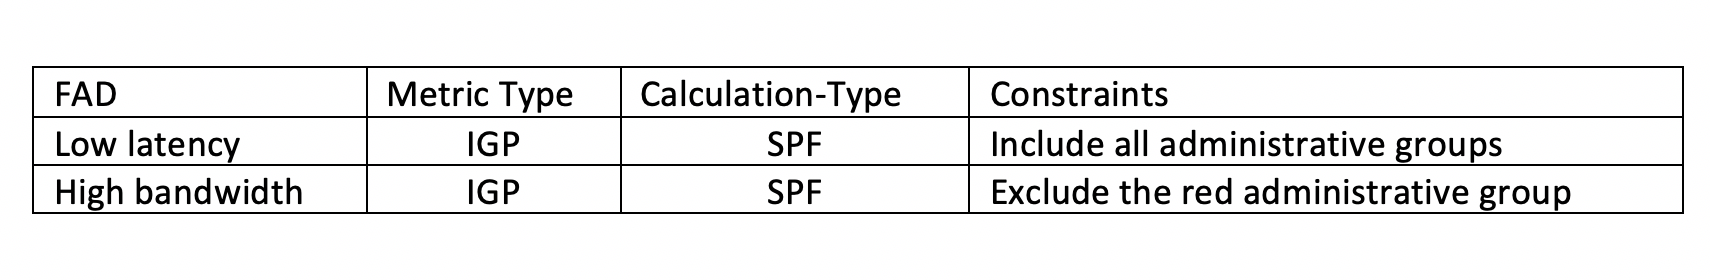 Table 2: Flexible Algorithm Definitions (FAD) for Use Case 1.